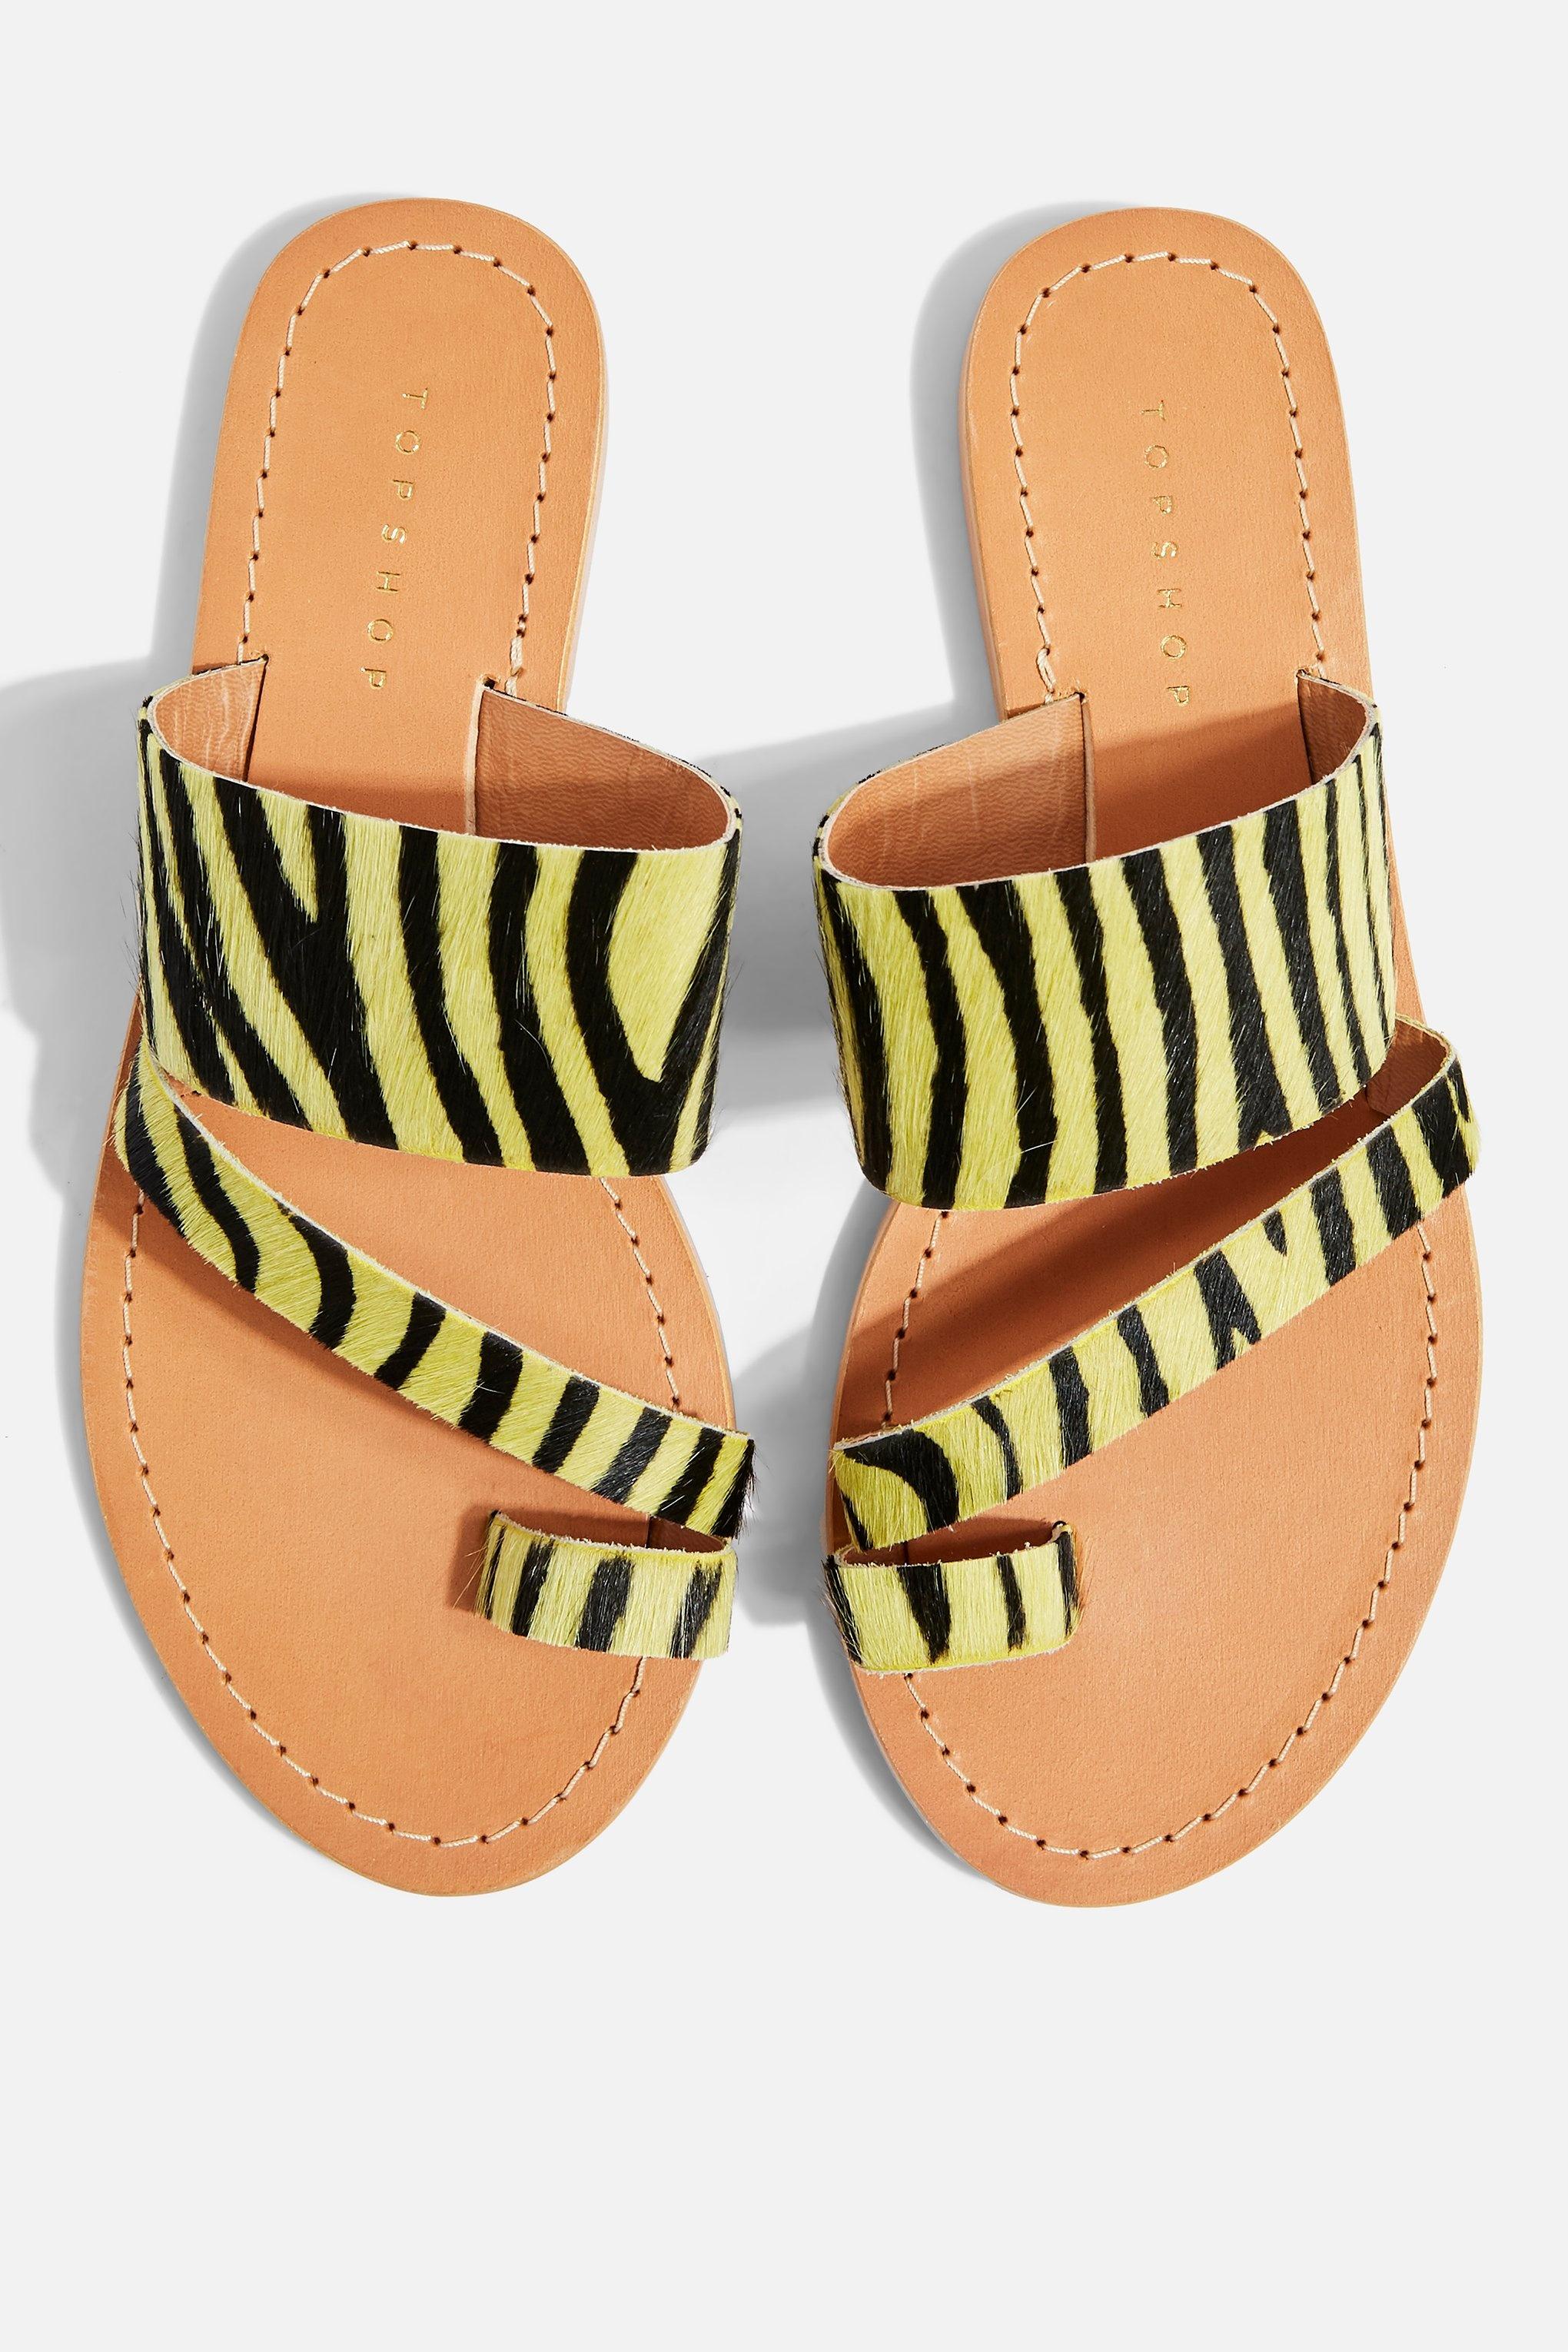 topshop honey sandals